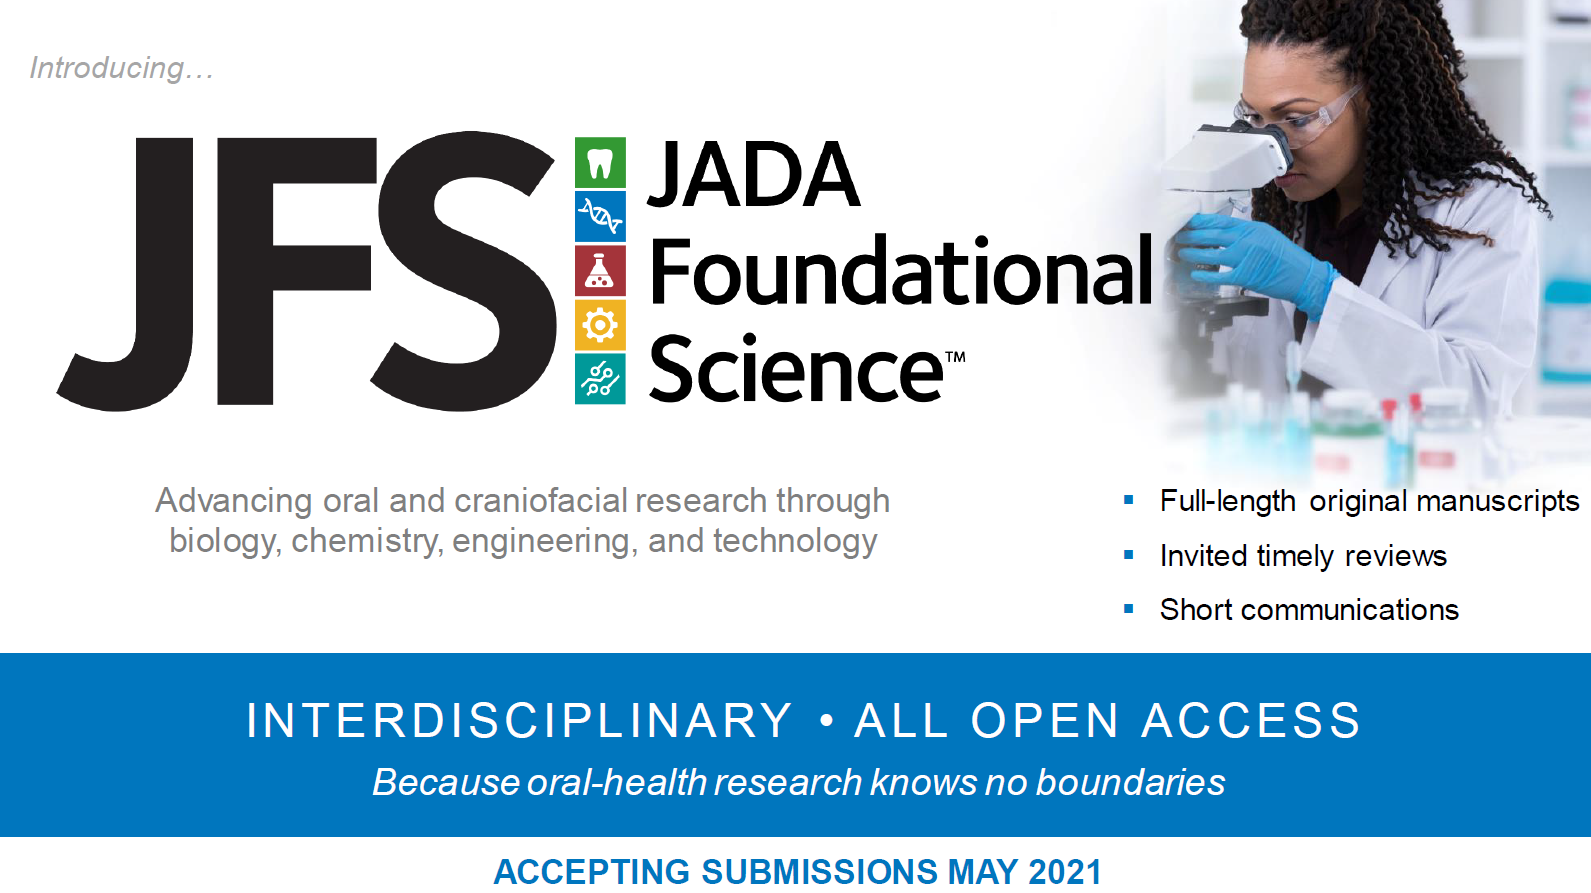 JADA Foundational Science